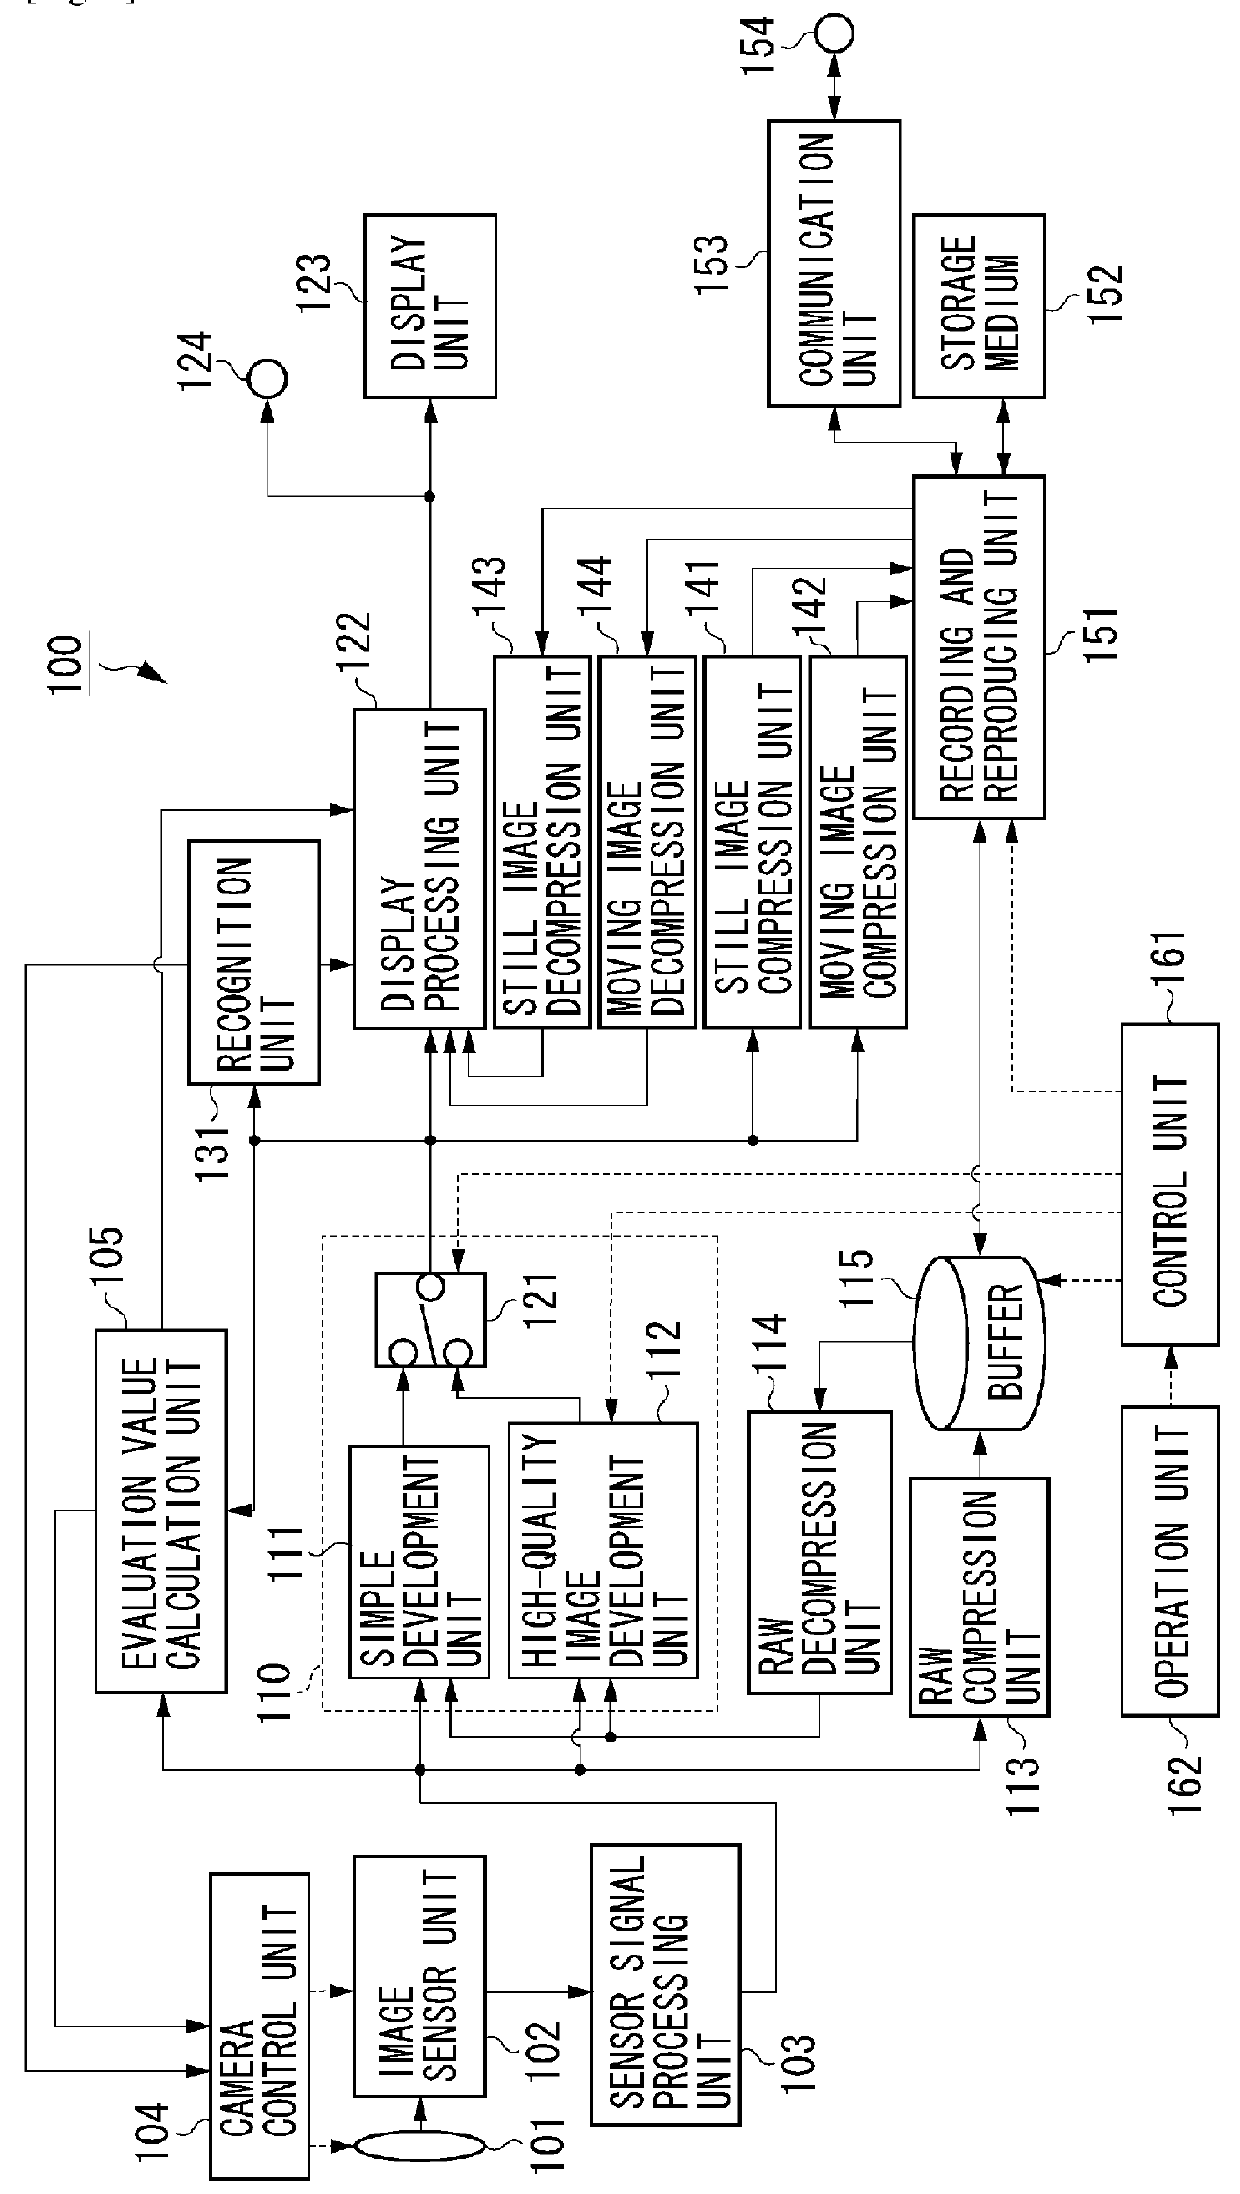 Imaging apparatus and imaging apparatus control method